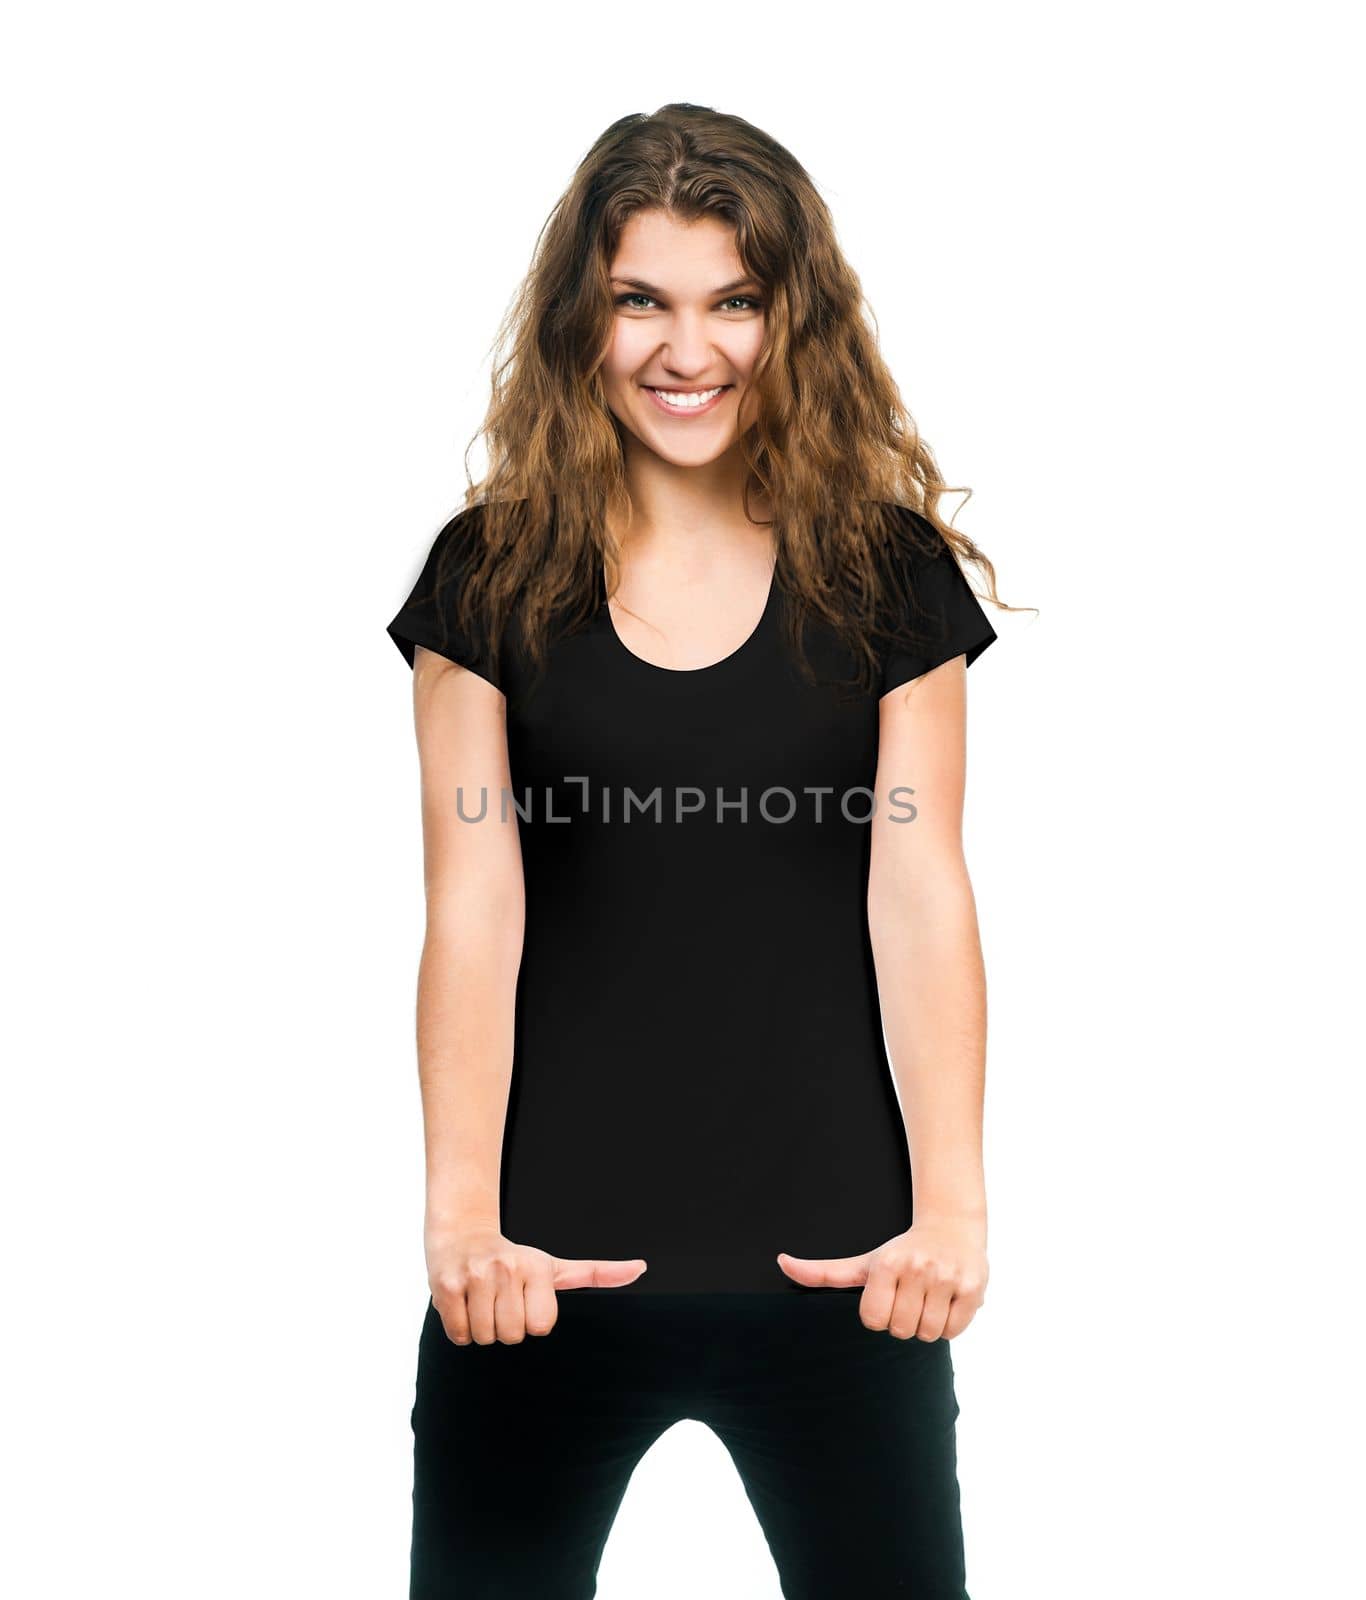 Young beautiful women posing with blank black t-shirts